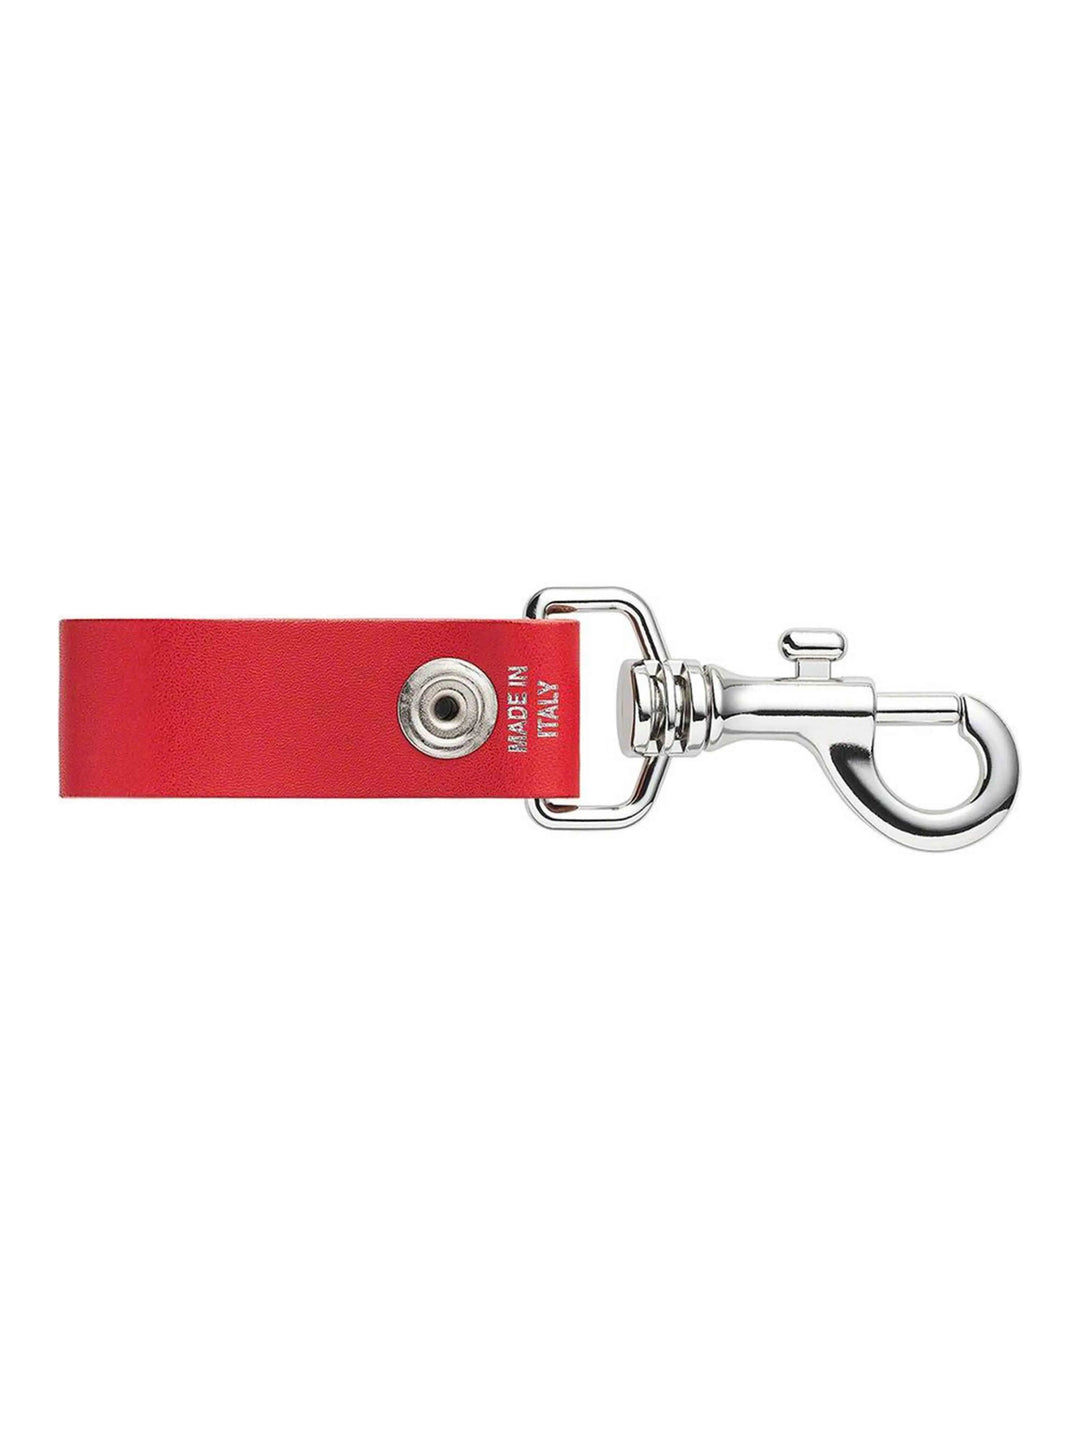 Supreme Leather Key Loop Red [SS21] Prior